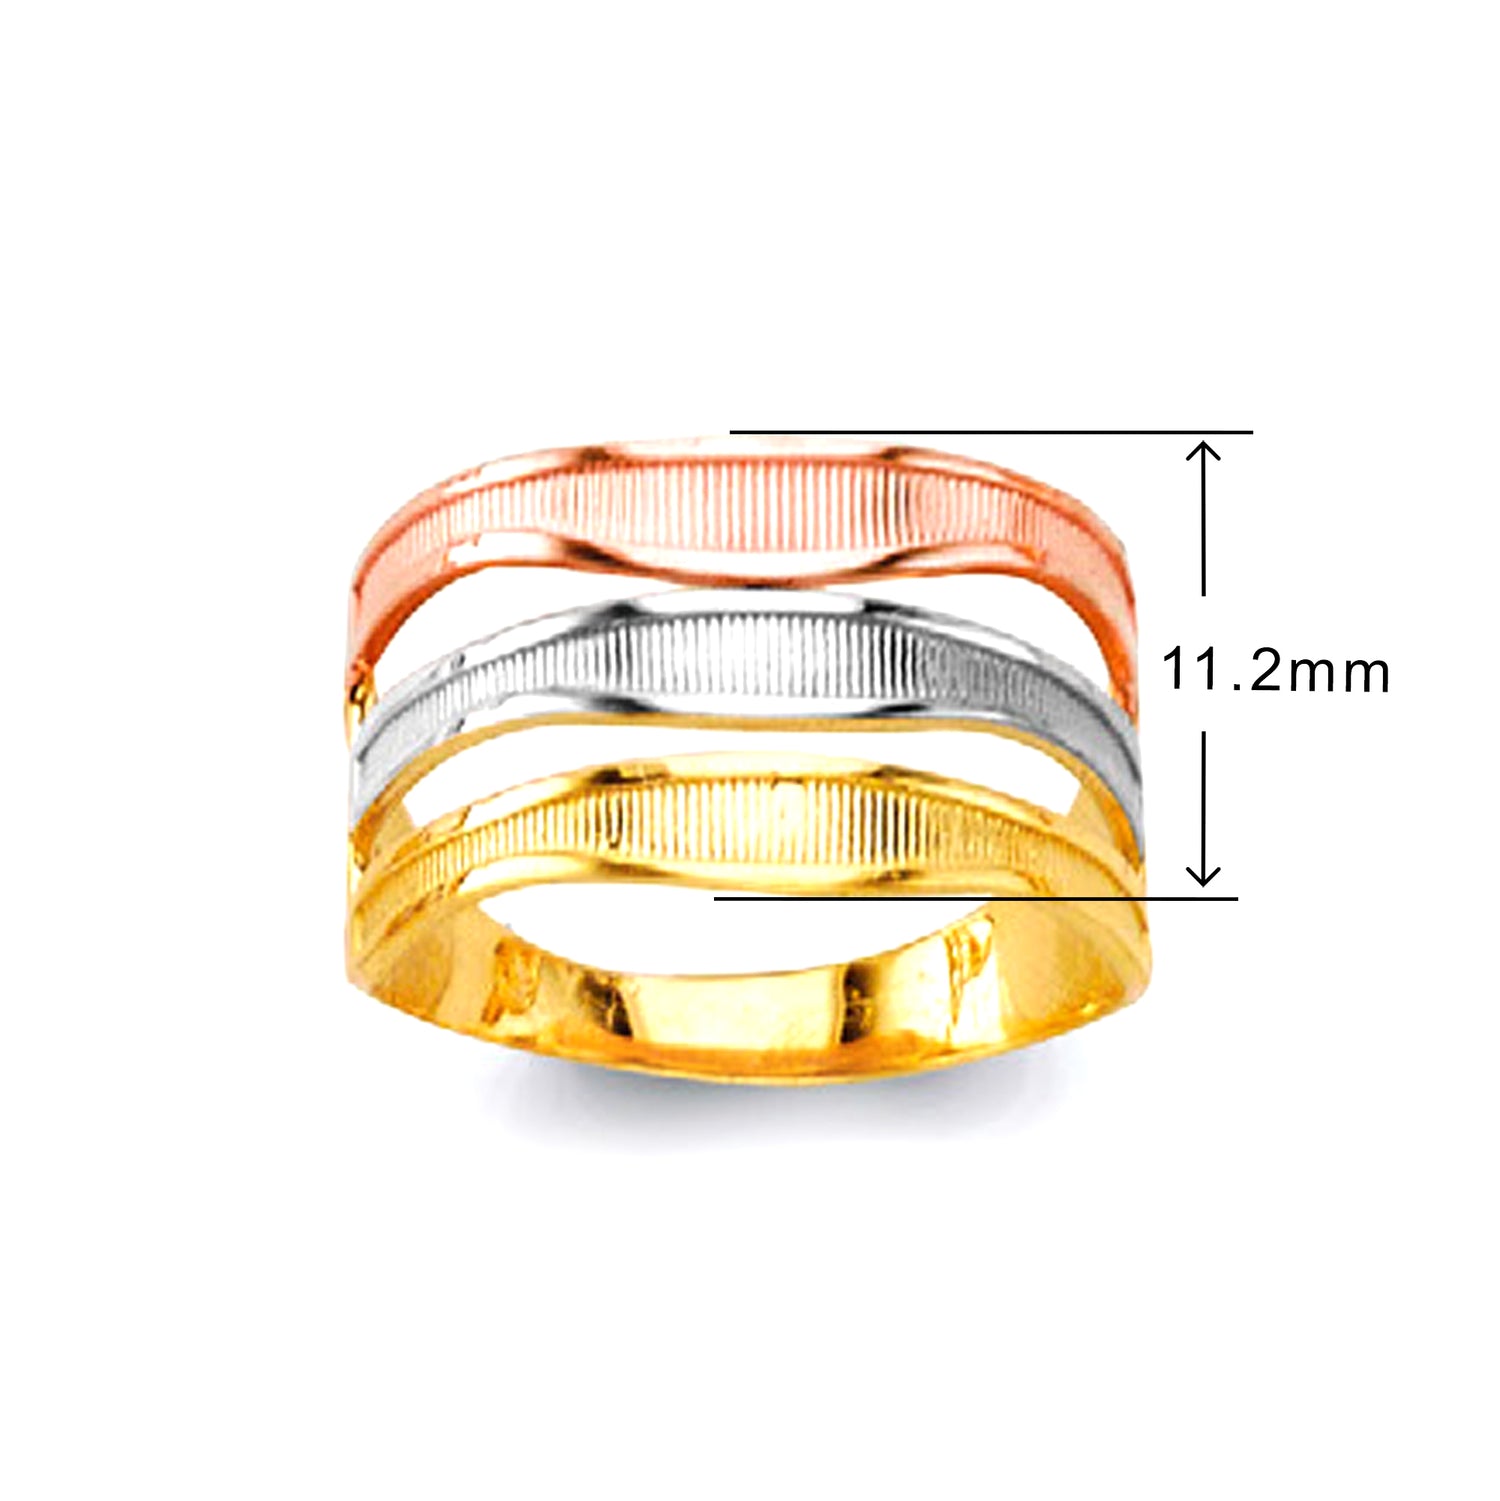 Tri Tone Gold Polished Multiband Ring